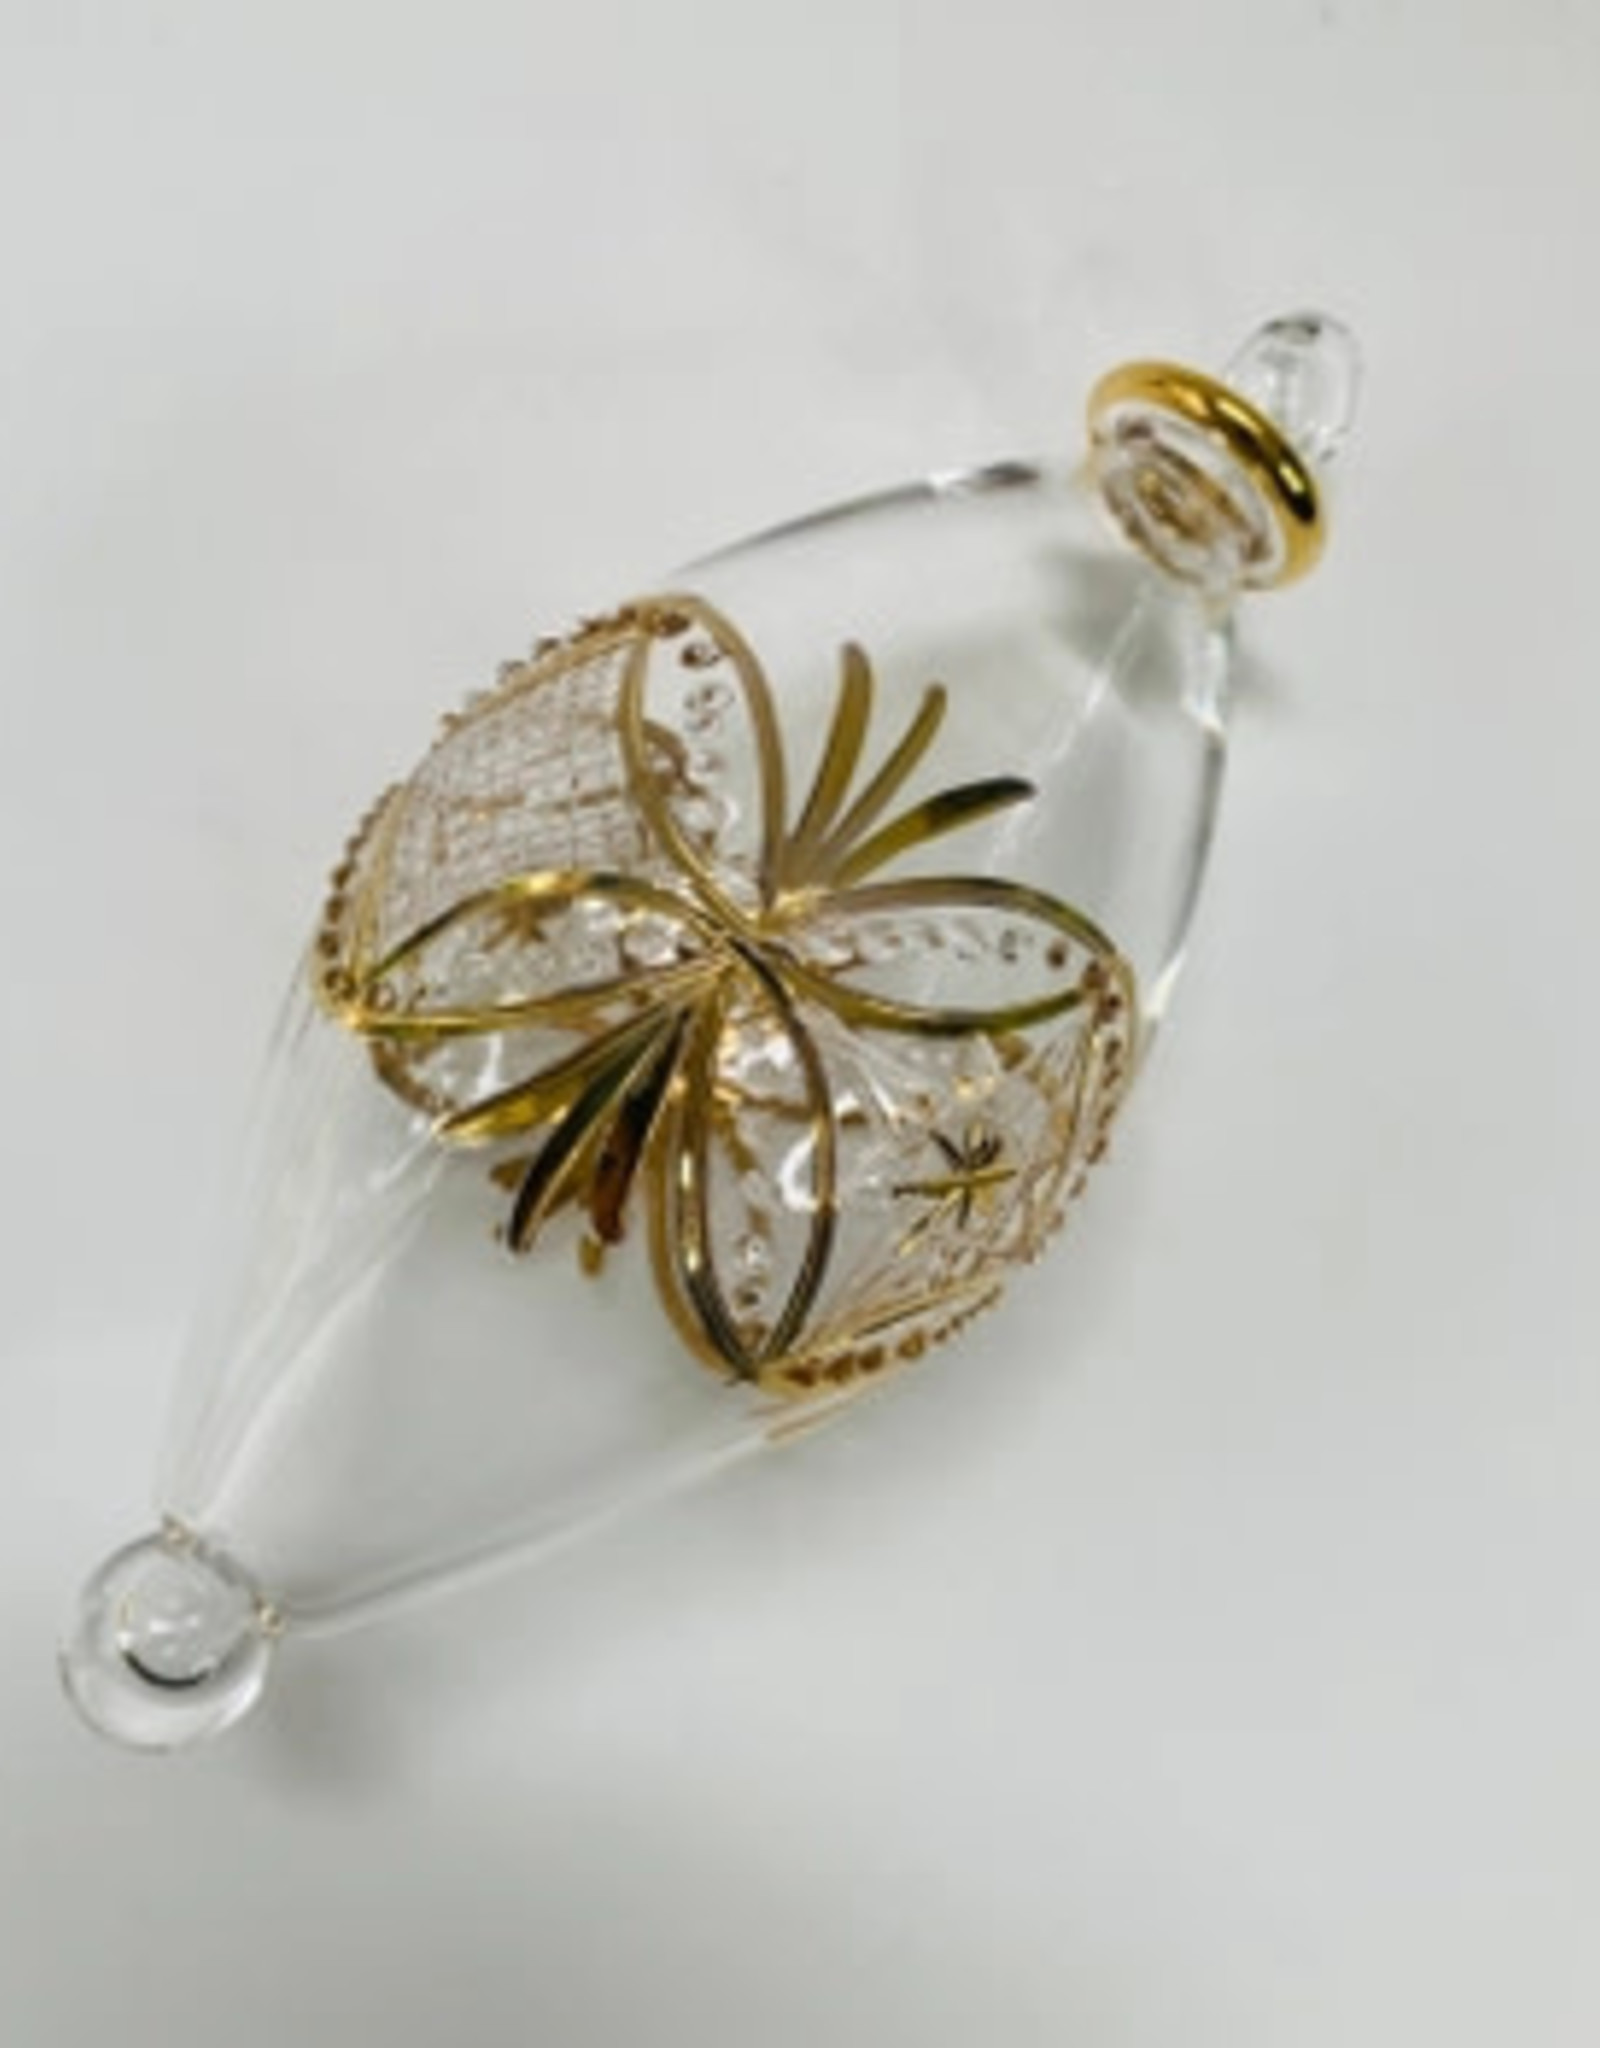 Dandarah Blown Glass Oval Ornament - Gold Carousel